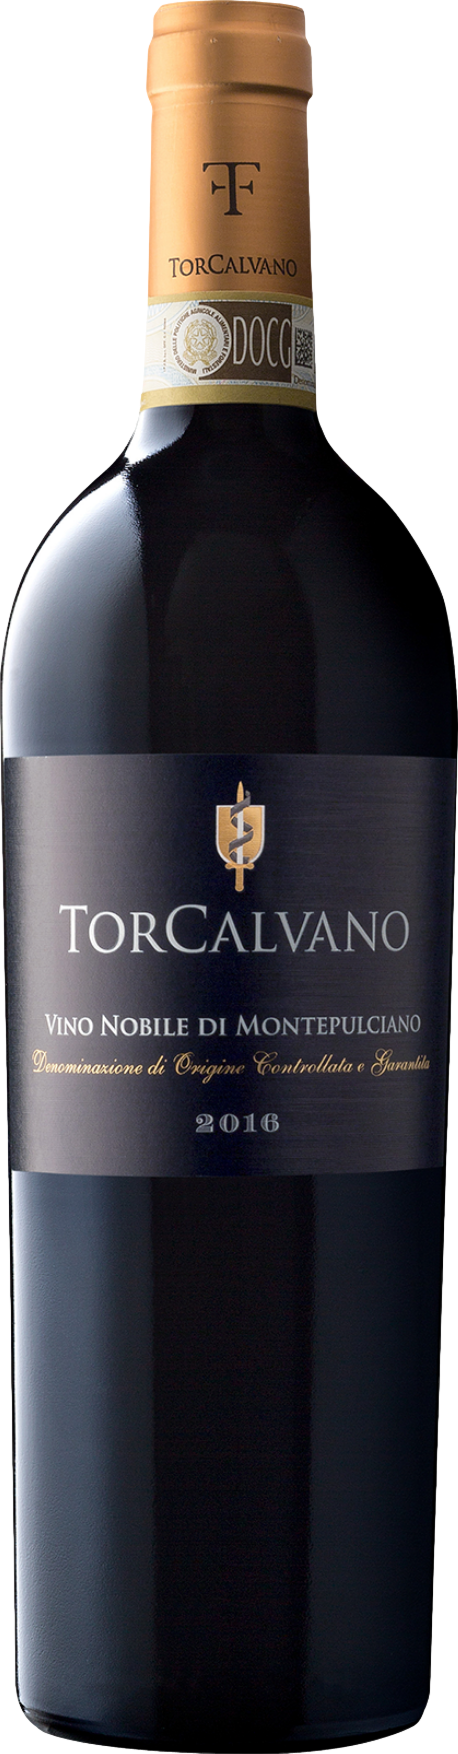 TorCalvano Vino Nobile di Montepulciano 2018